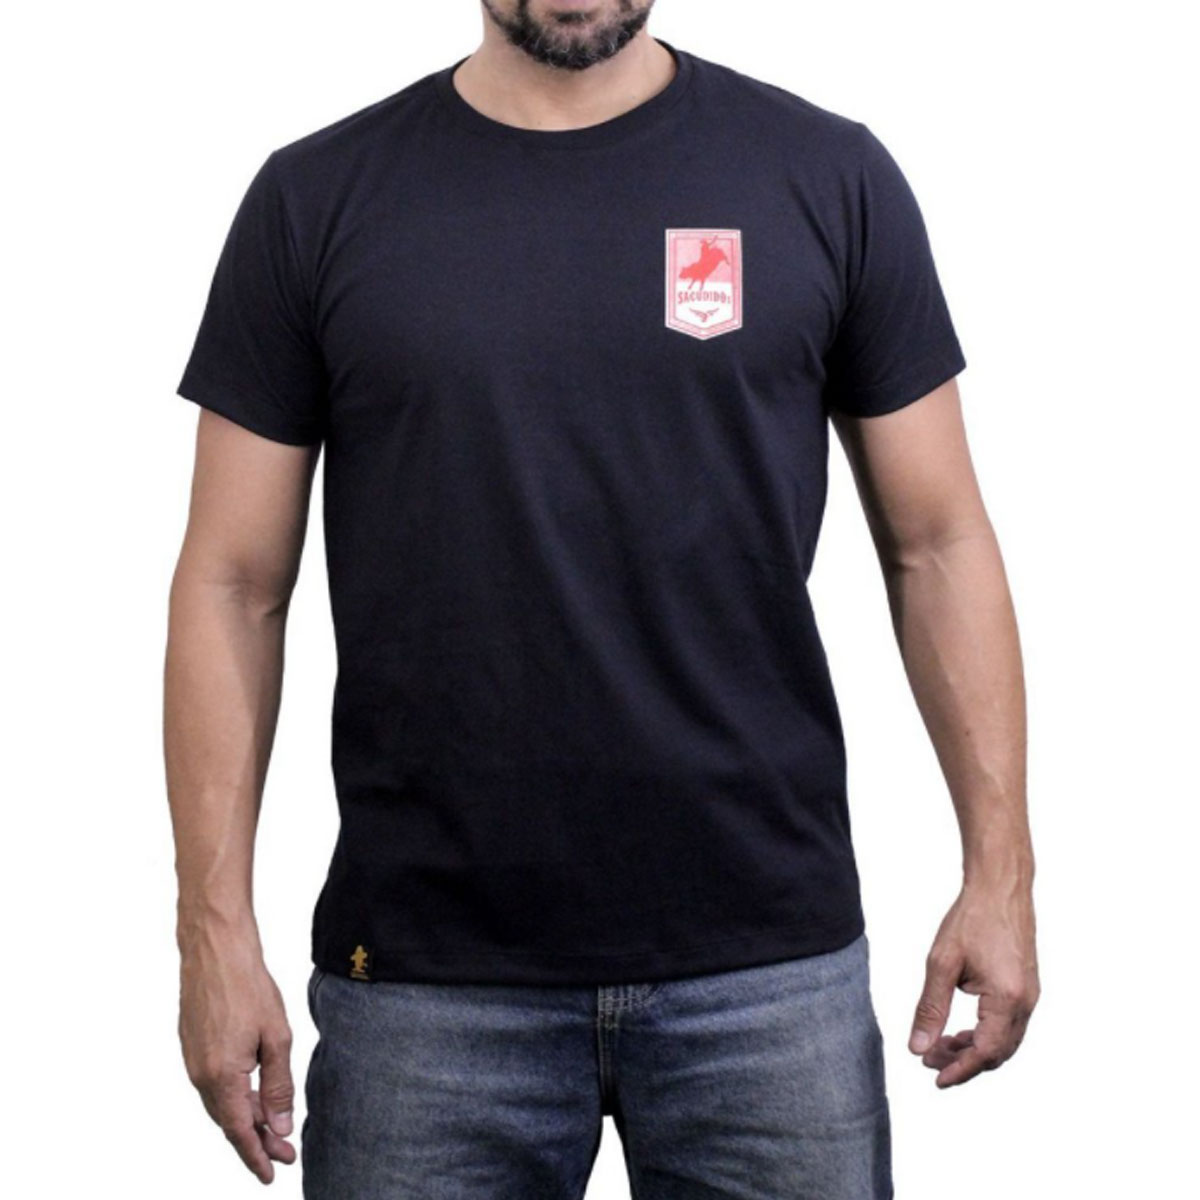 Camiseta Masculina Sacudido's Touro Costas Preto CM-236